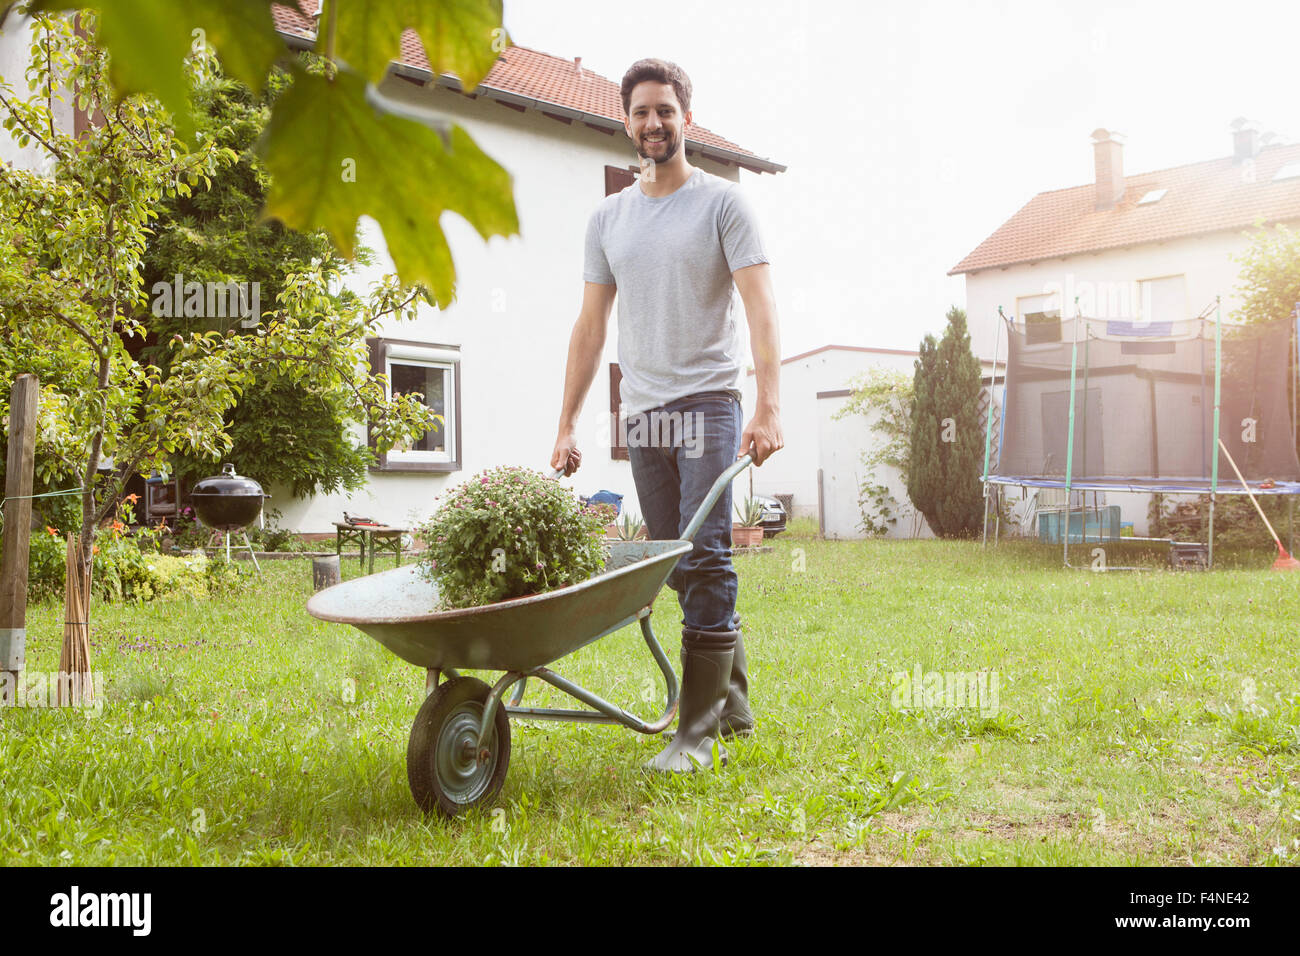 Man pushing wheelbarrow with plant in garden Stock Photo